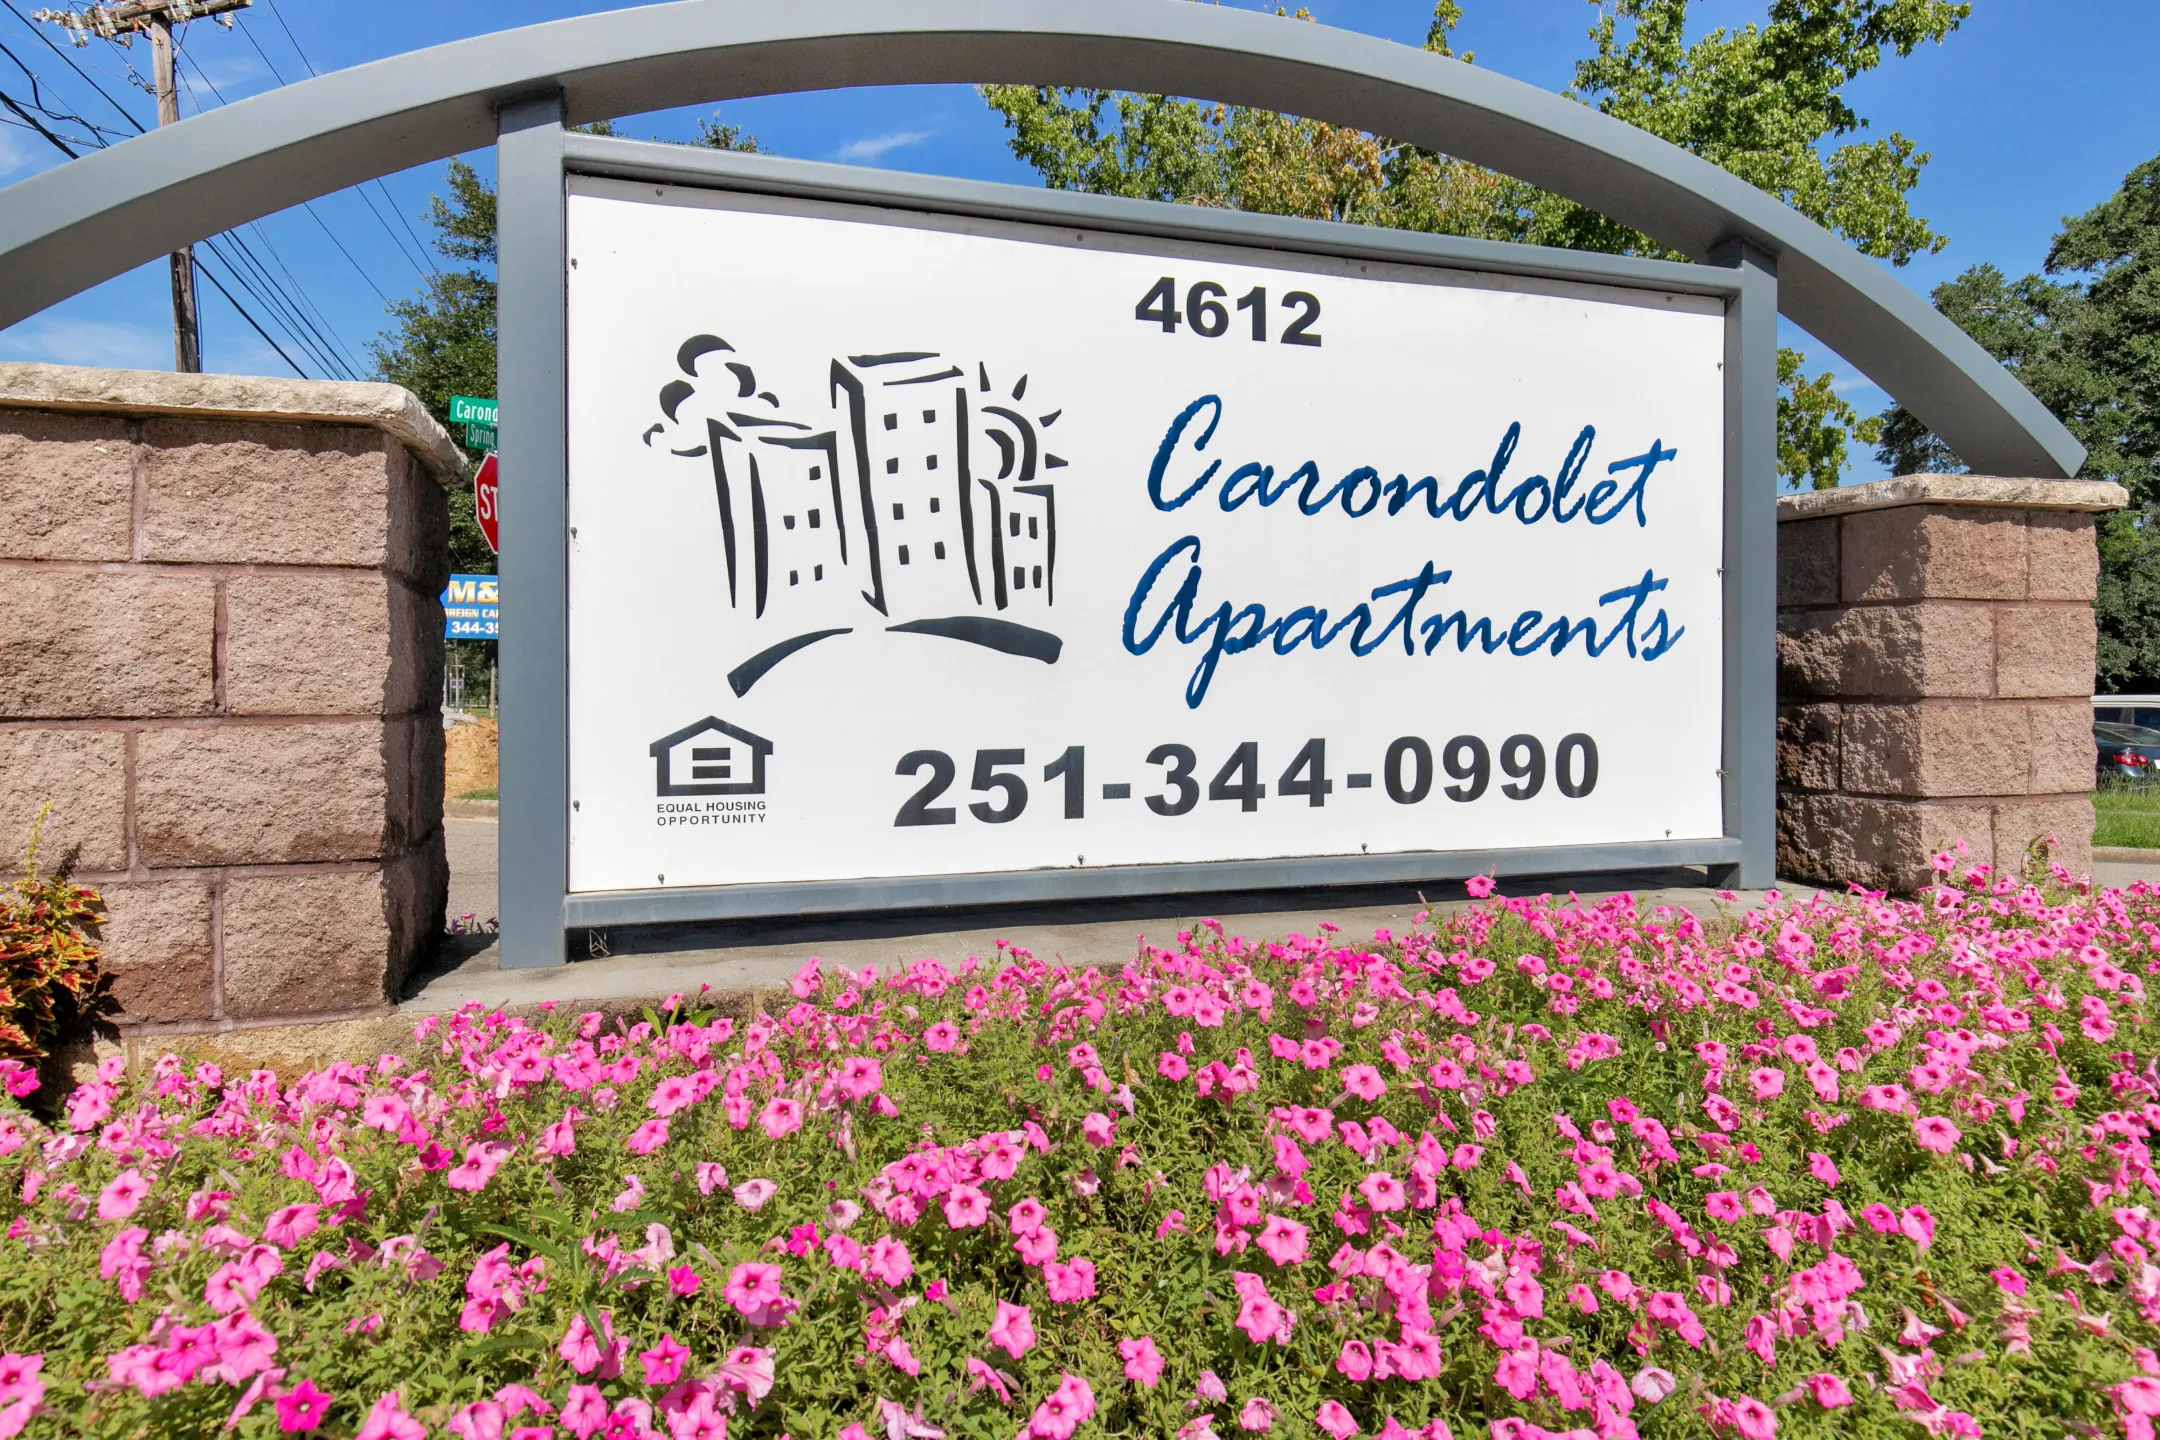 Community Signage - Carondolet Apartments - Mobile, AL